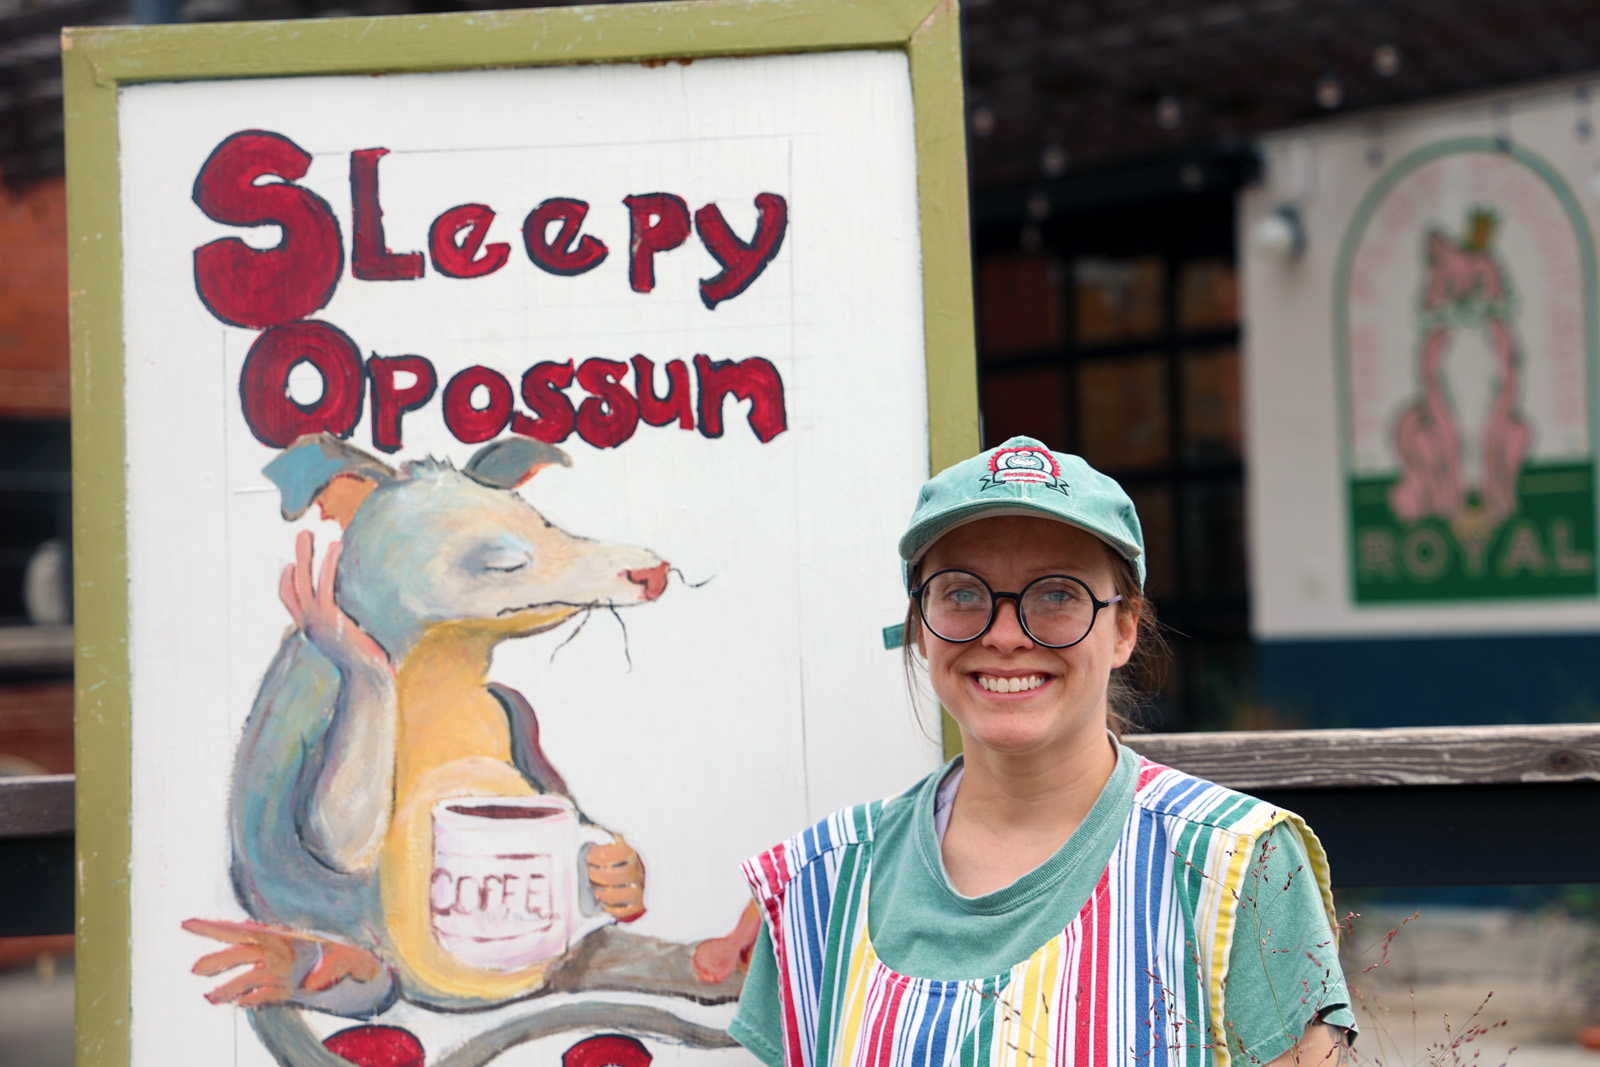 Sleepy Opossum Cafe to move to standalone Rountree location